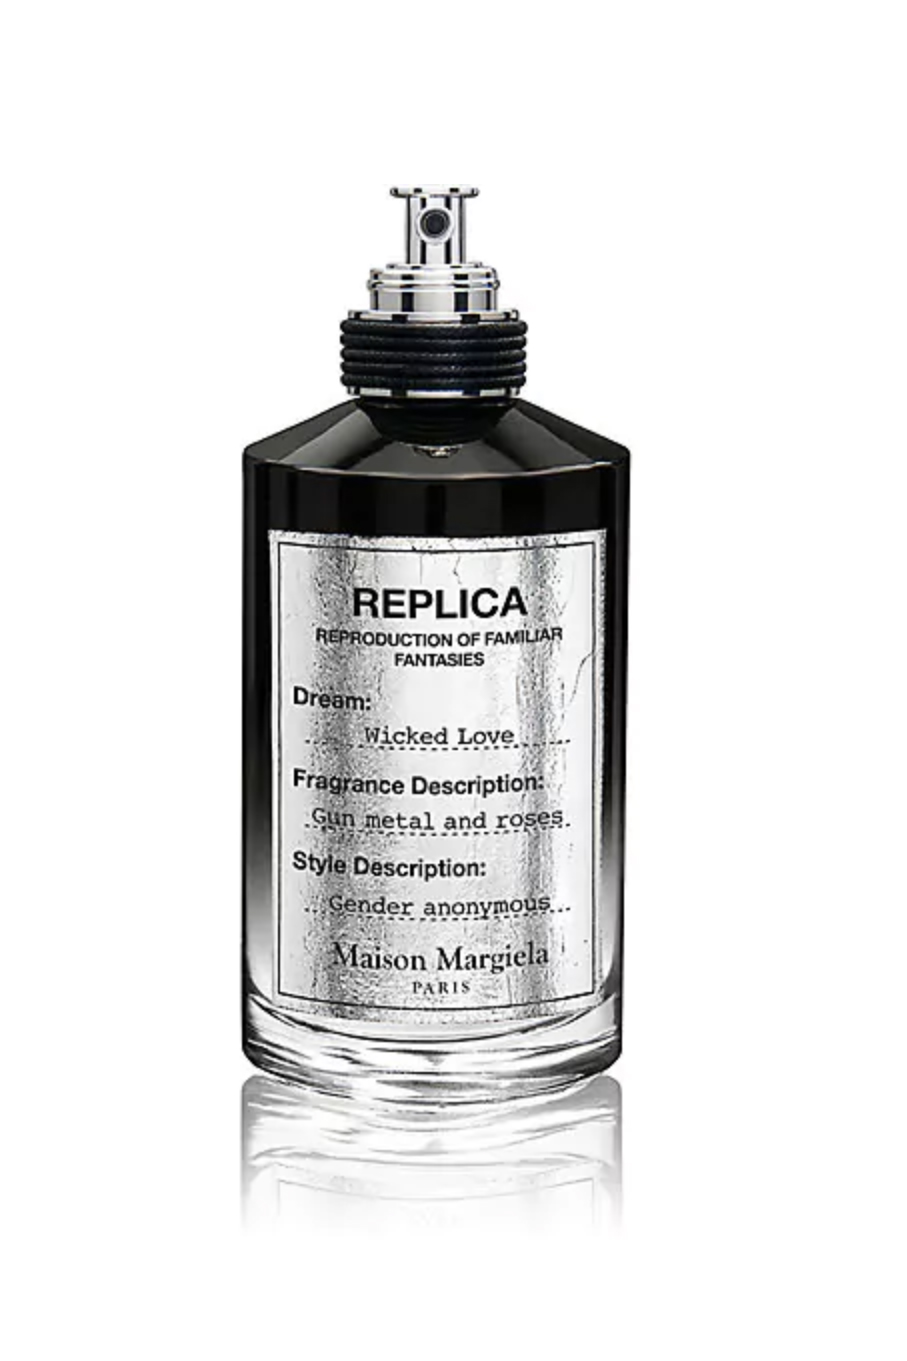 Maison Margiela 经典香水 “REPLICA” 将推出 3 款新香 – NOWRE现客